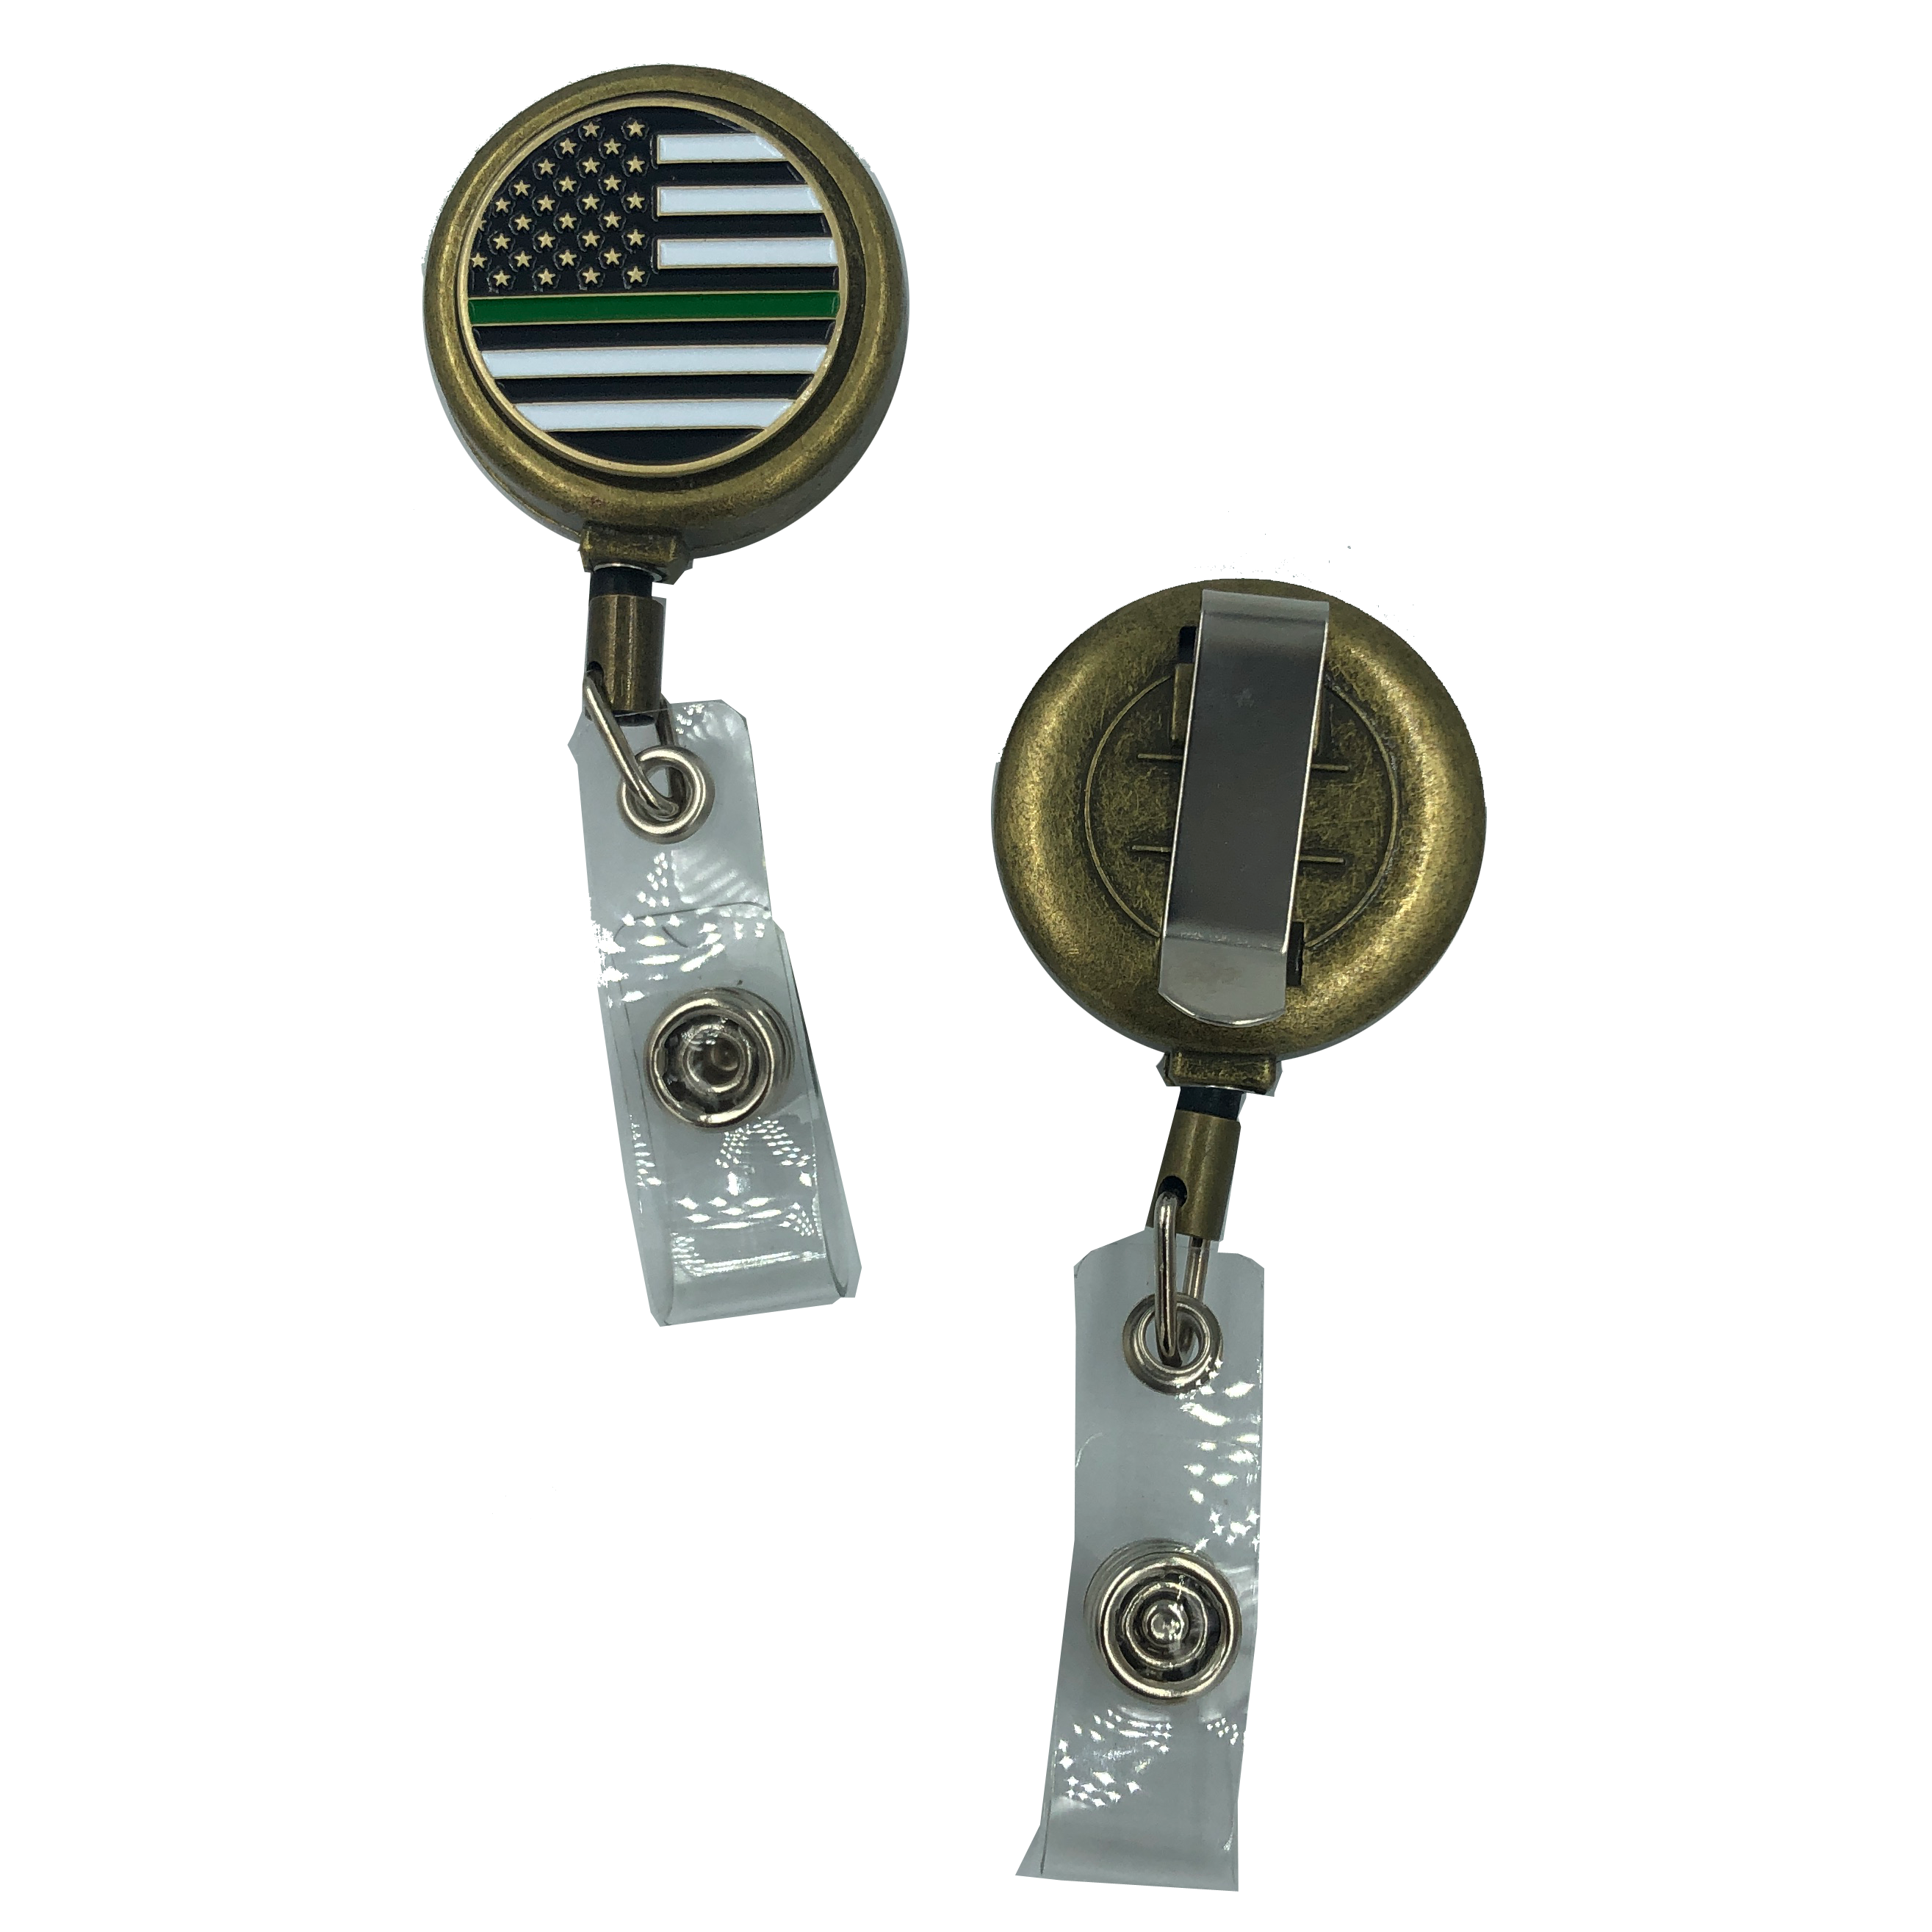  Metal Retractable Badge Holder - Slip Clip - Round - Gunmetal  - Laser Engraved 130181-RD-GM-L